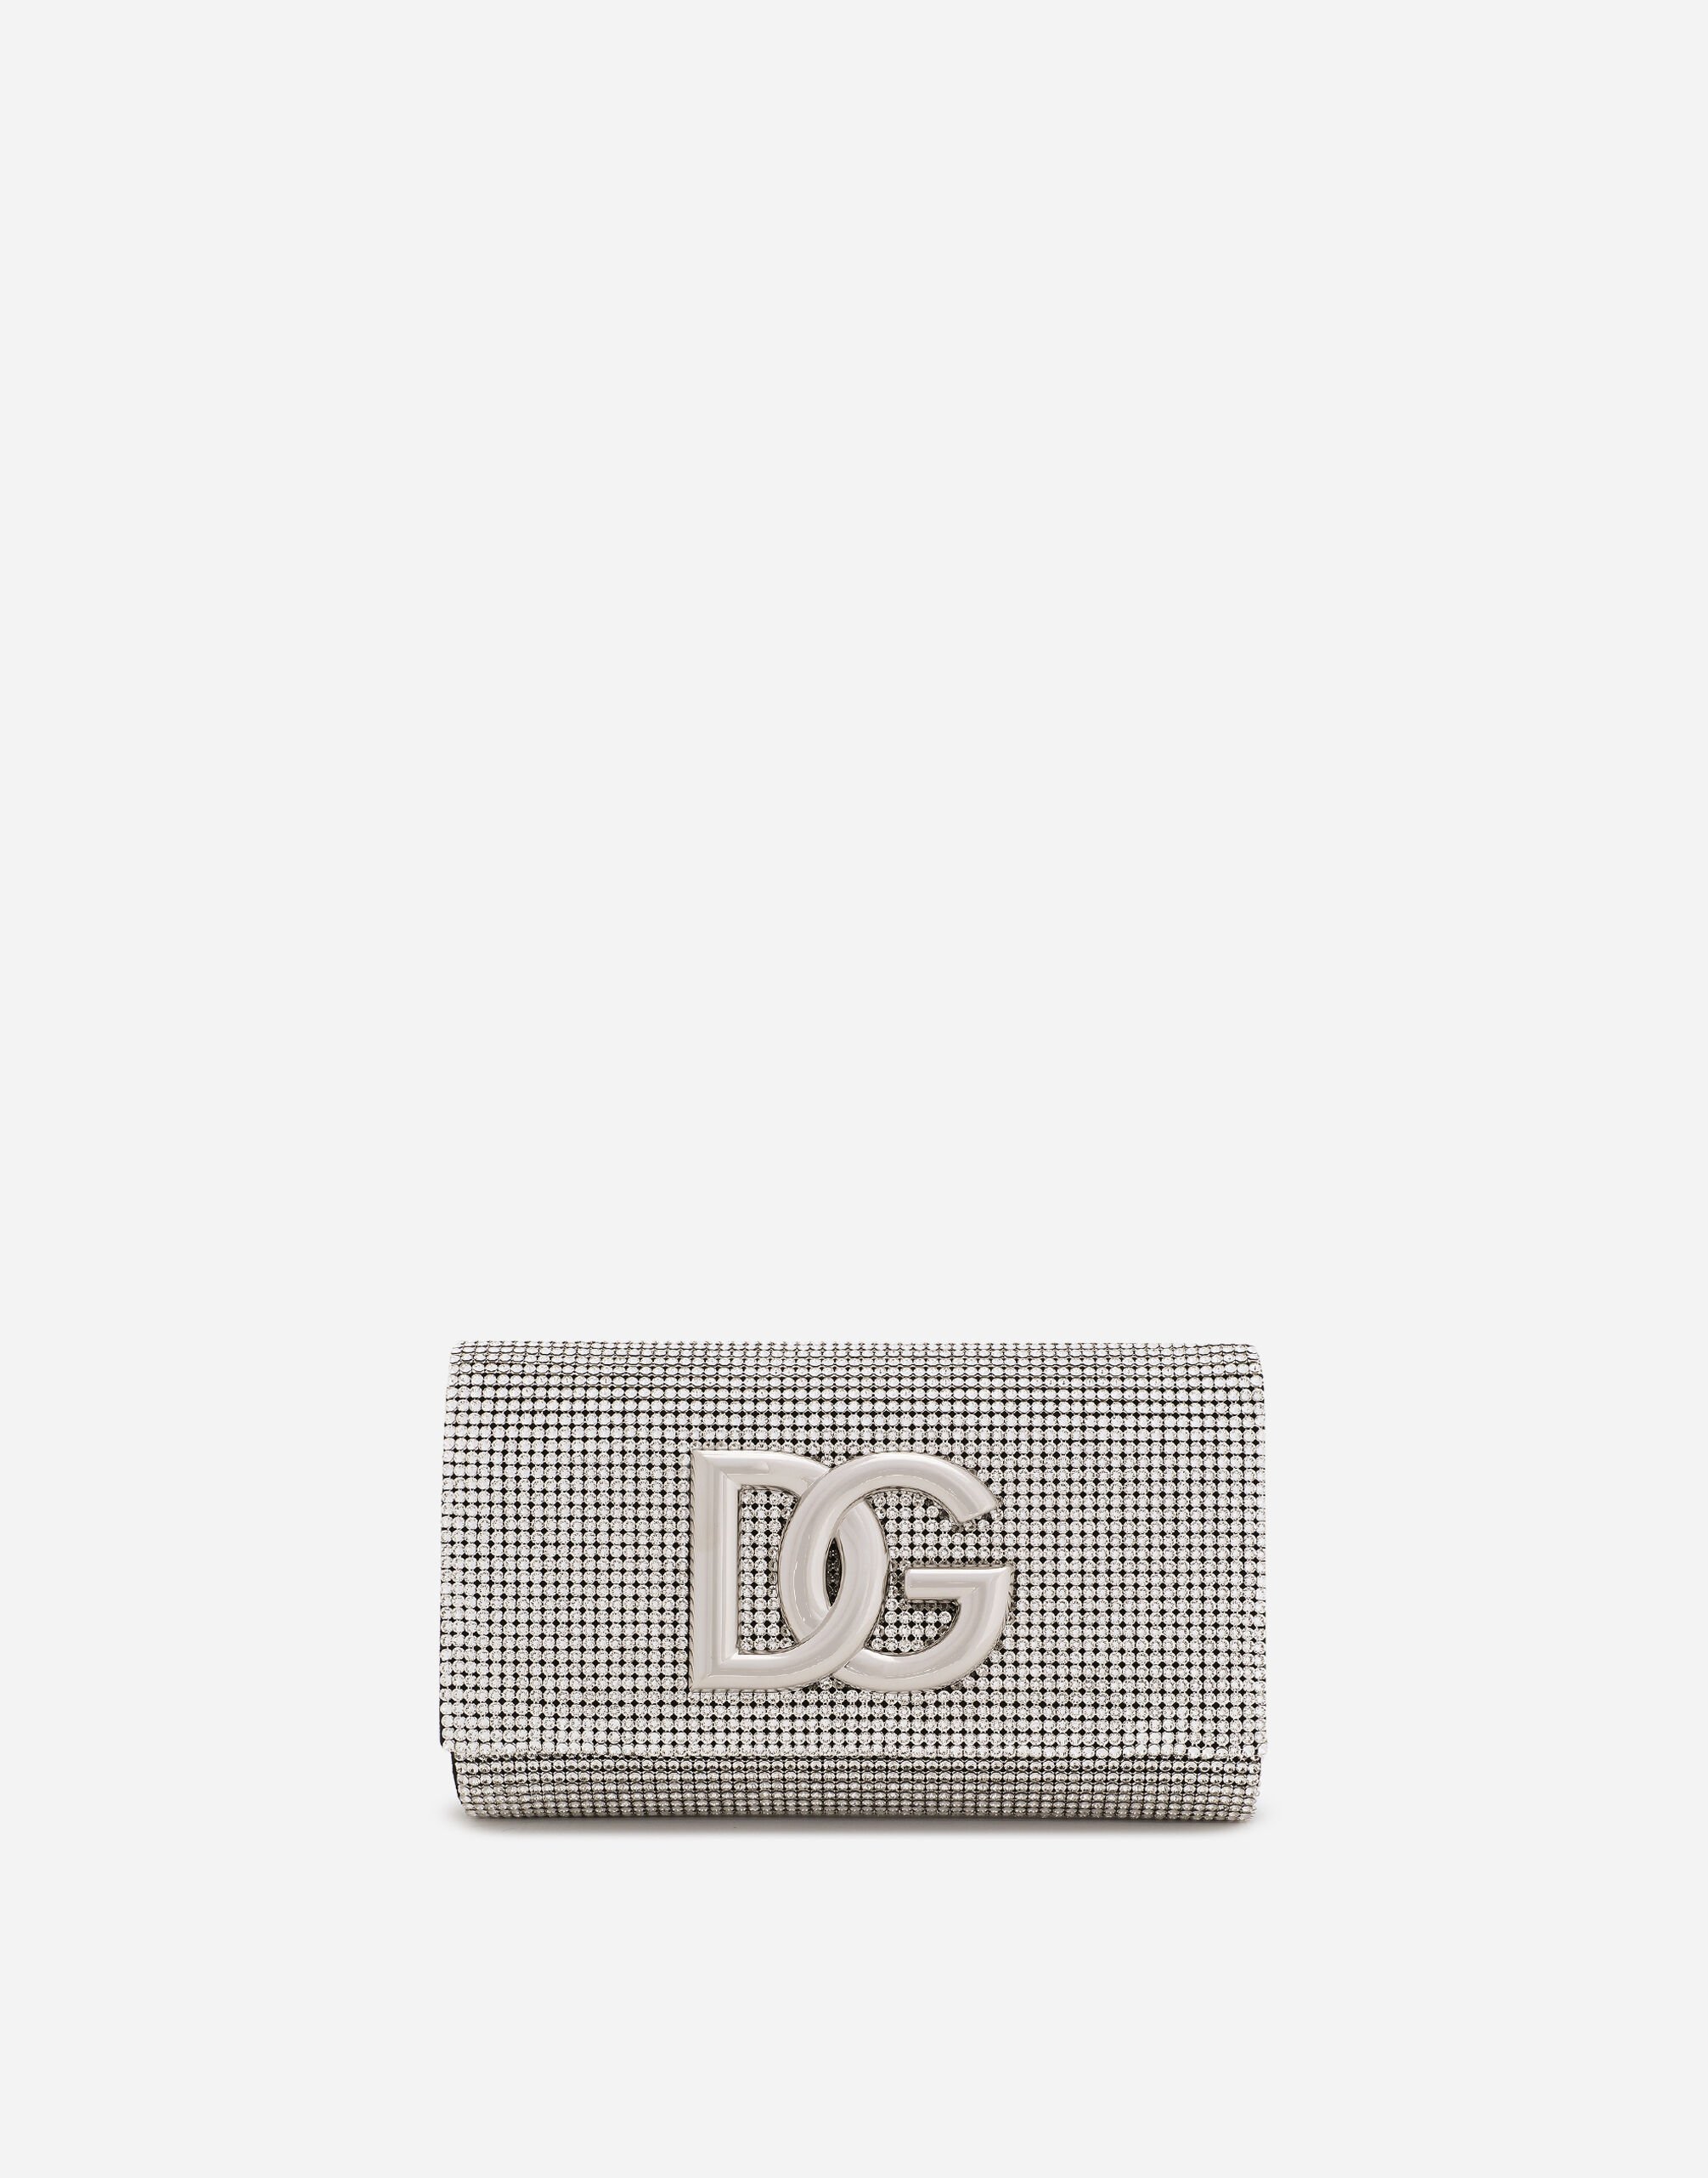 Dolce & Gabbana حقيبة بشعار DG من كريستال شبكي متعدد الألوان BB7655A4547